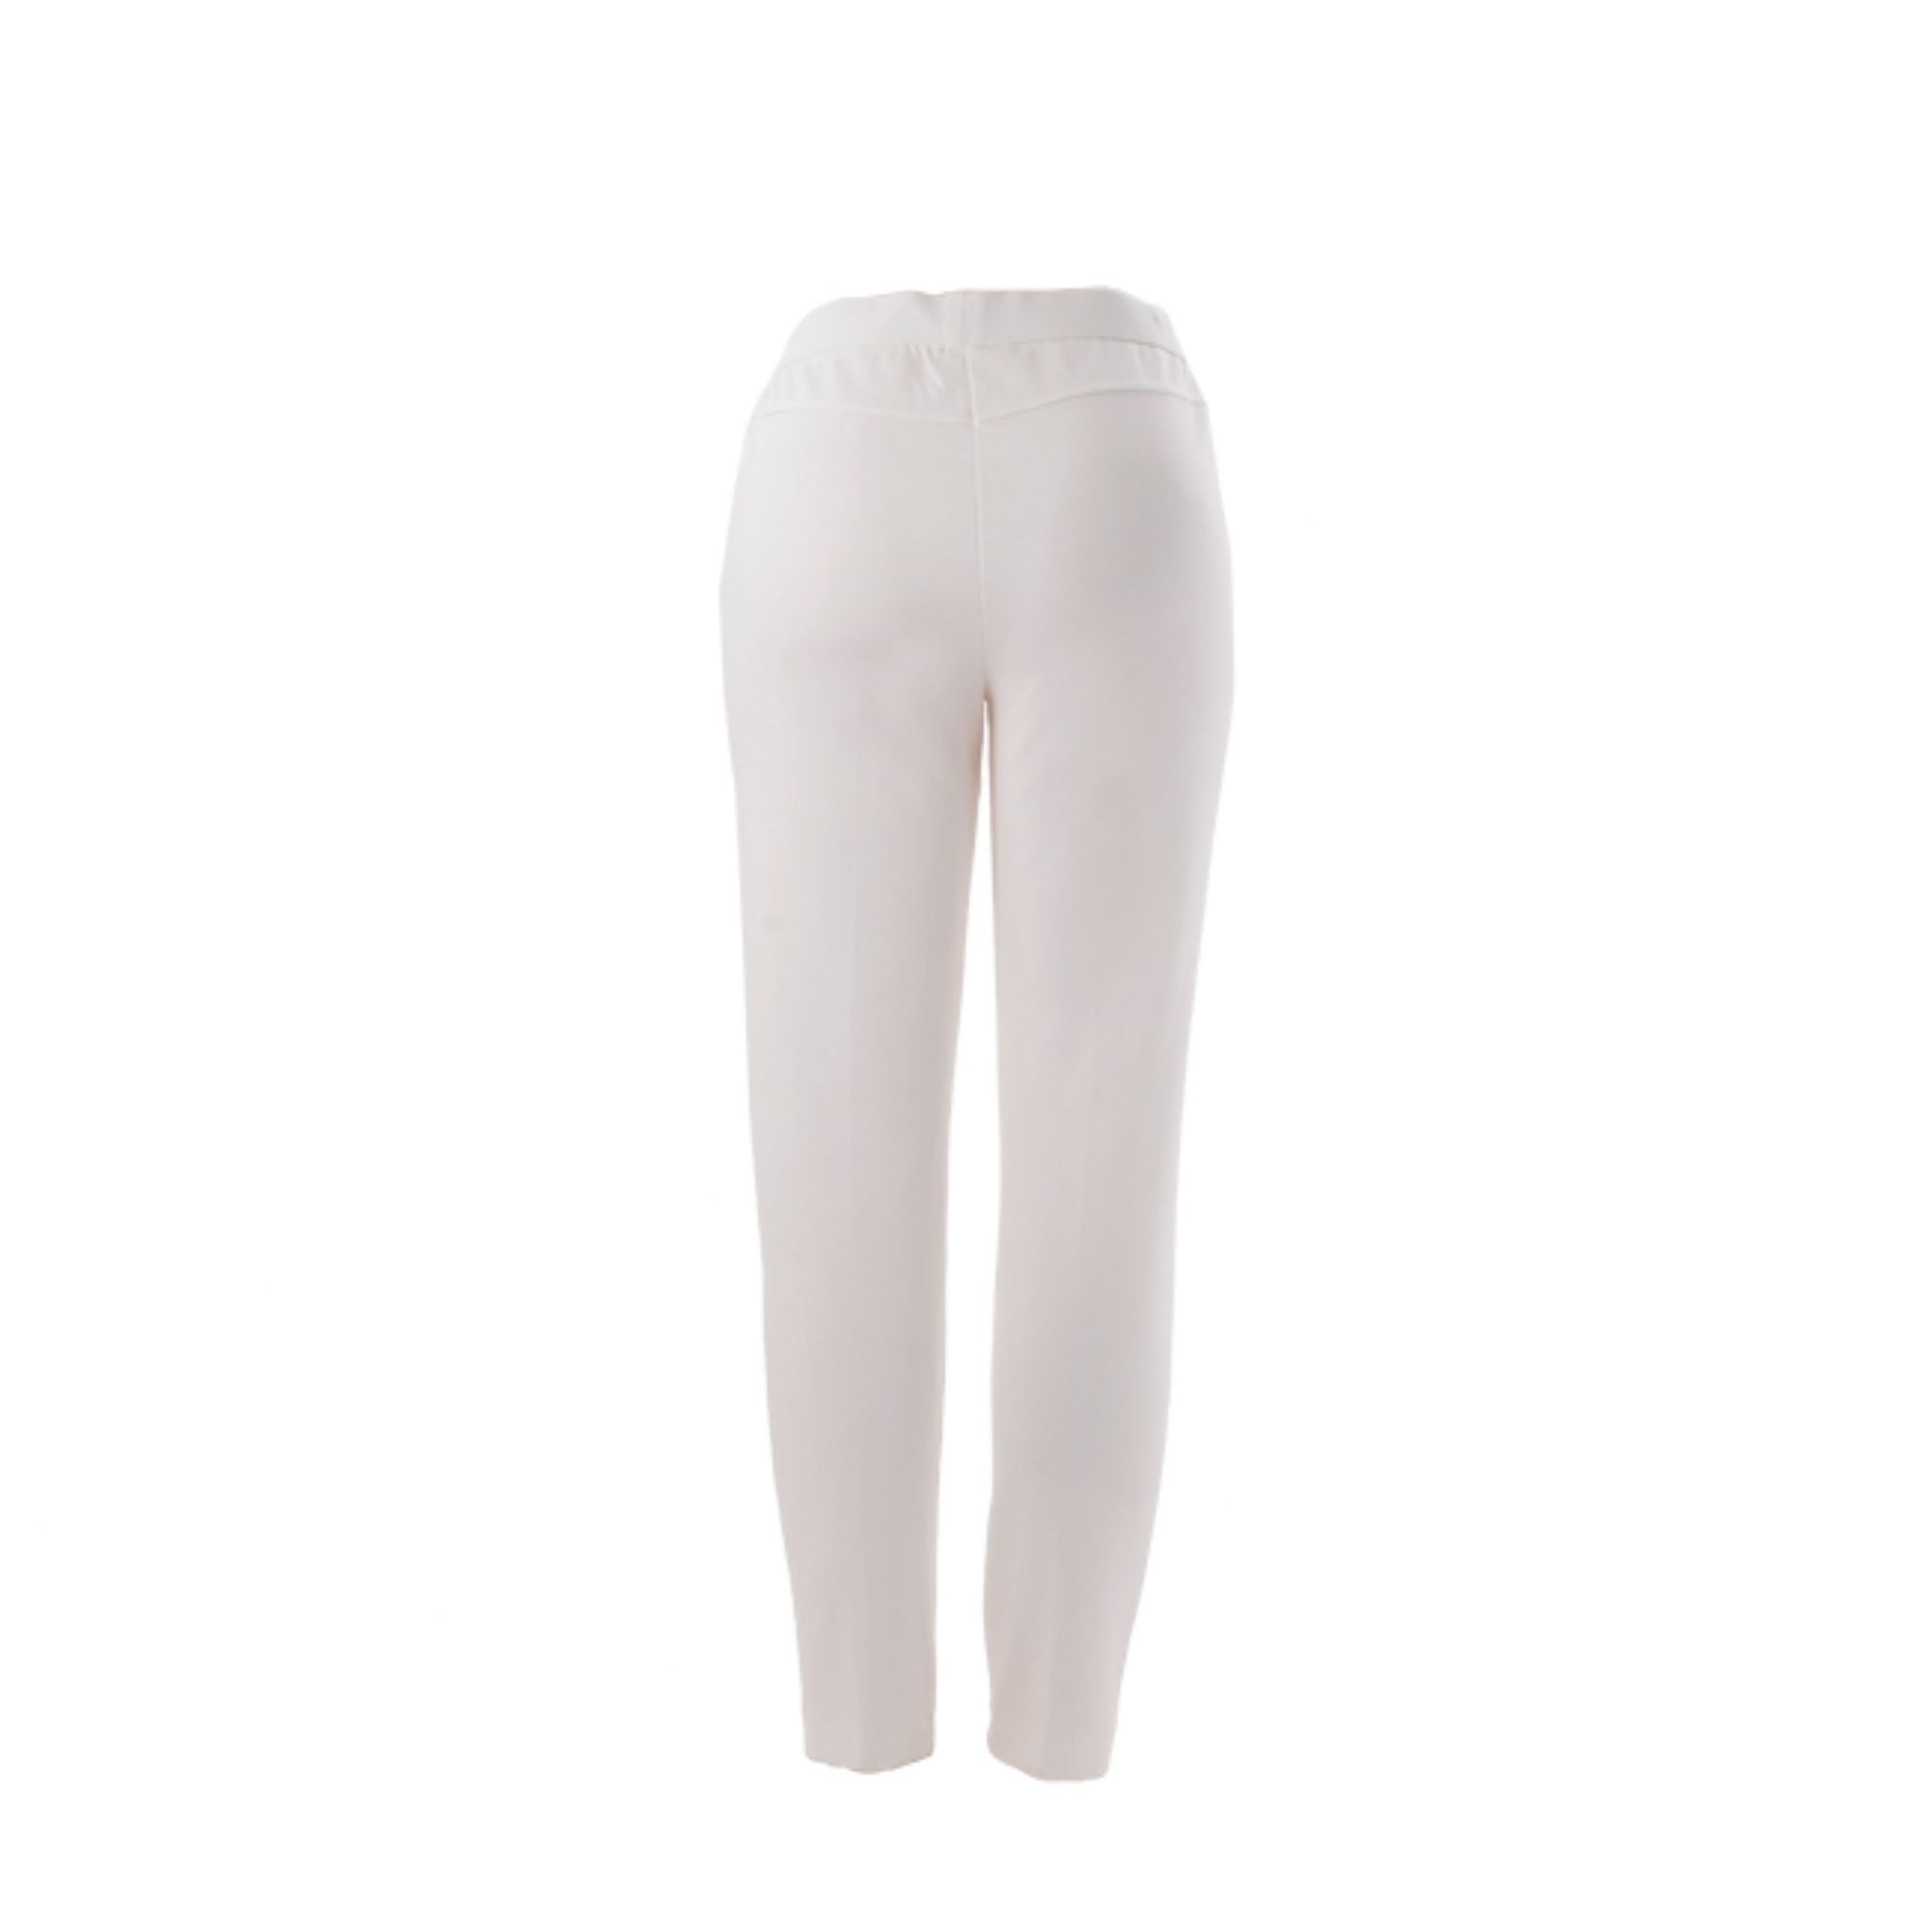 Enro Long Pants - White